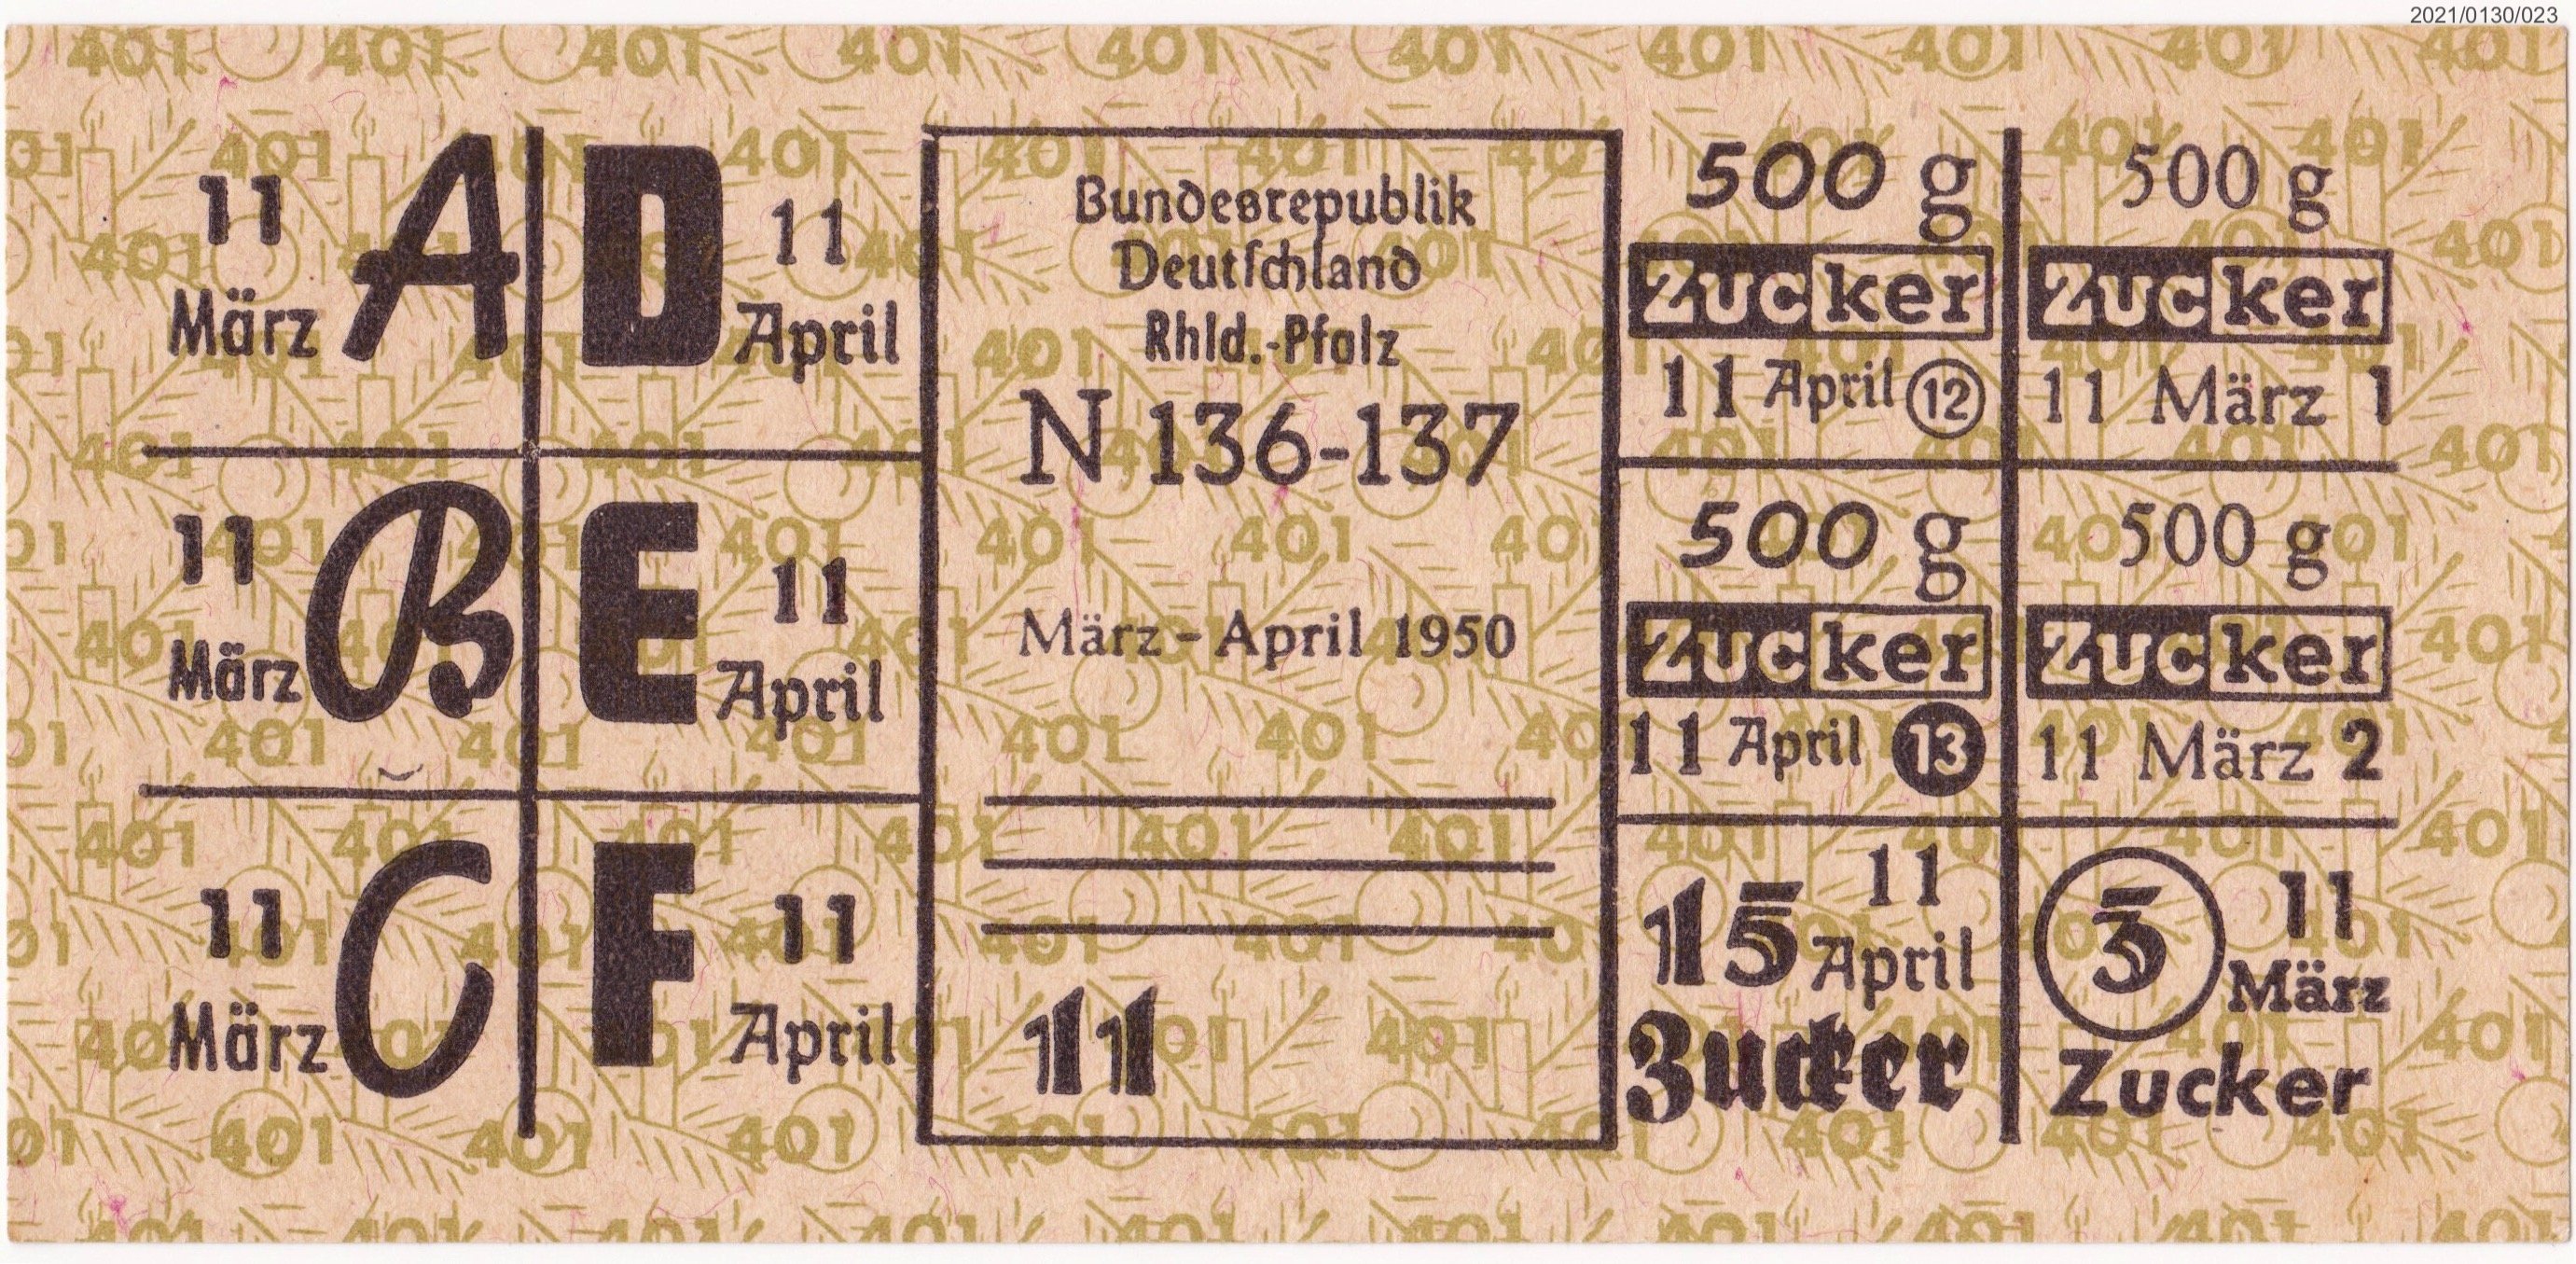 Zuckerkarte Bundesrepublik Deutschland Rhld.-Pfalz März-April 1950 (Museumsgesellschaft Bad Dürkheim e. V. CC BY-NC-SA)